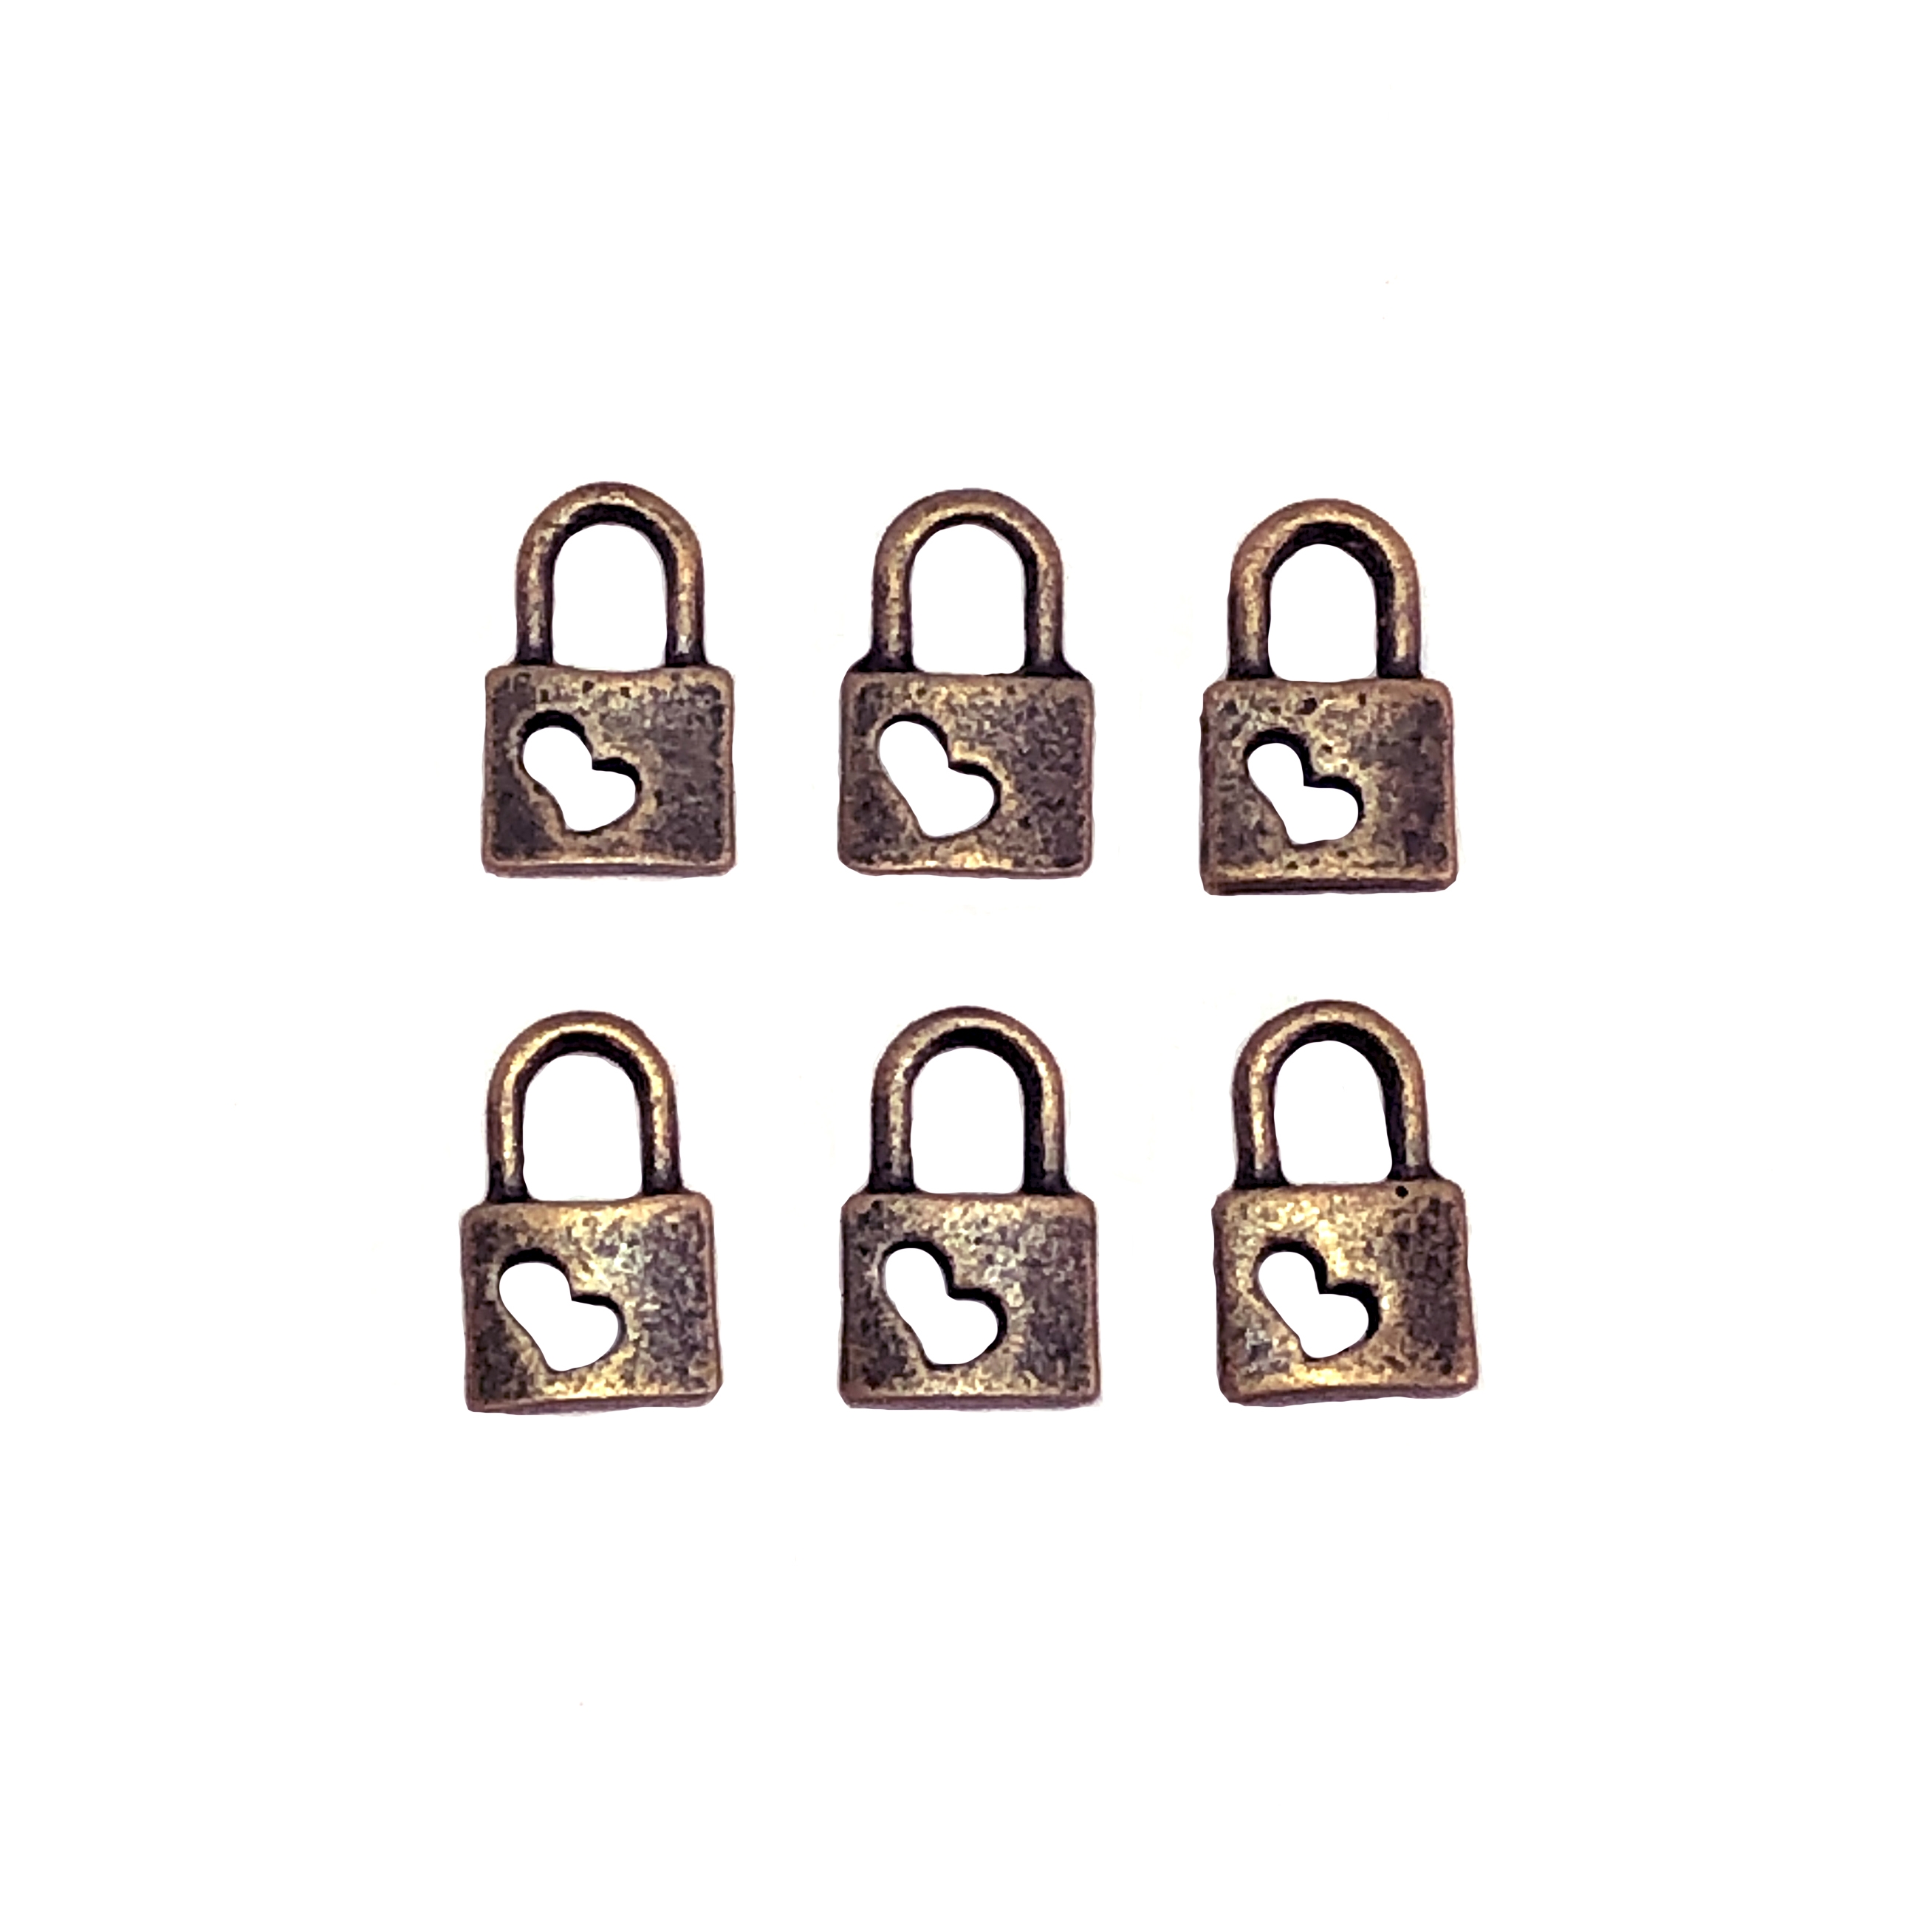 Mini Heart Locks Charms 09162 Lock Charms Charm Heart Lock